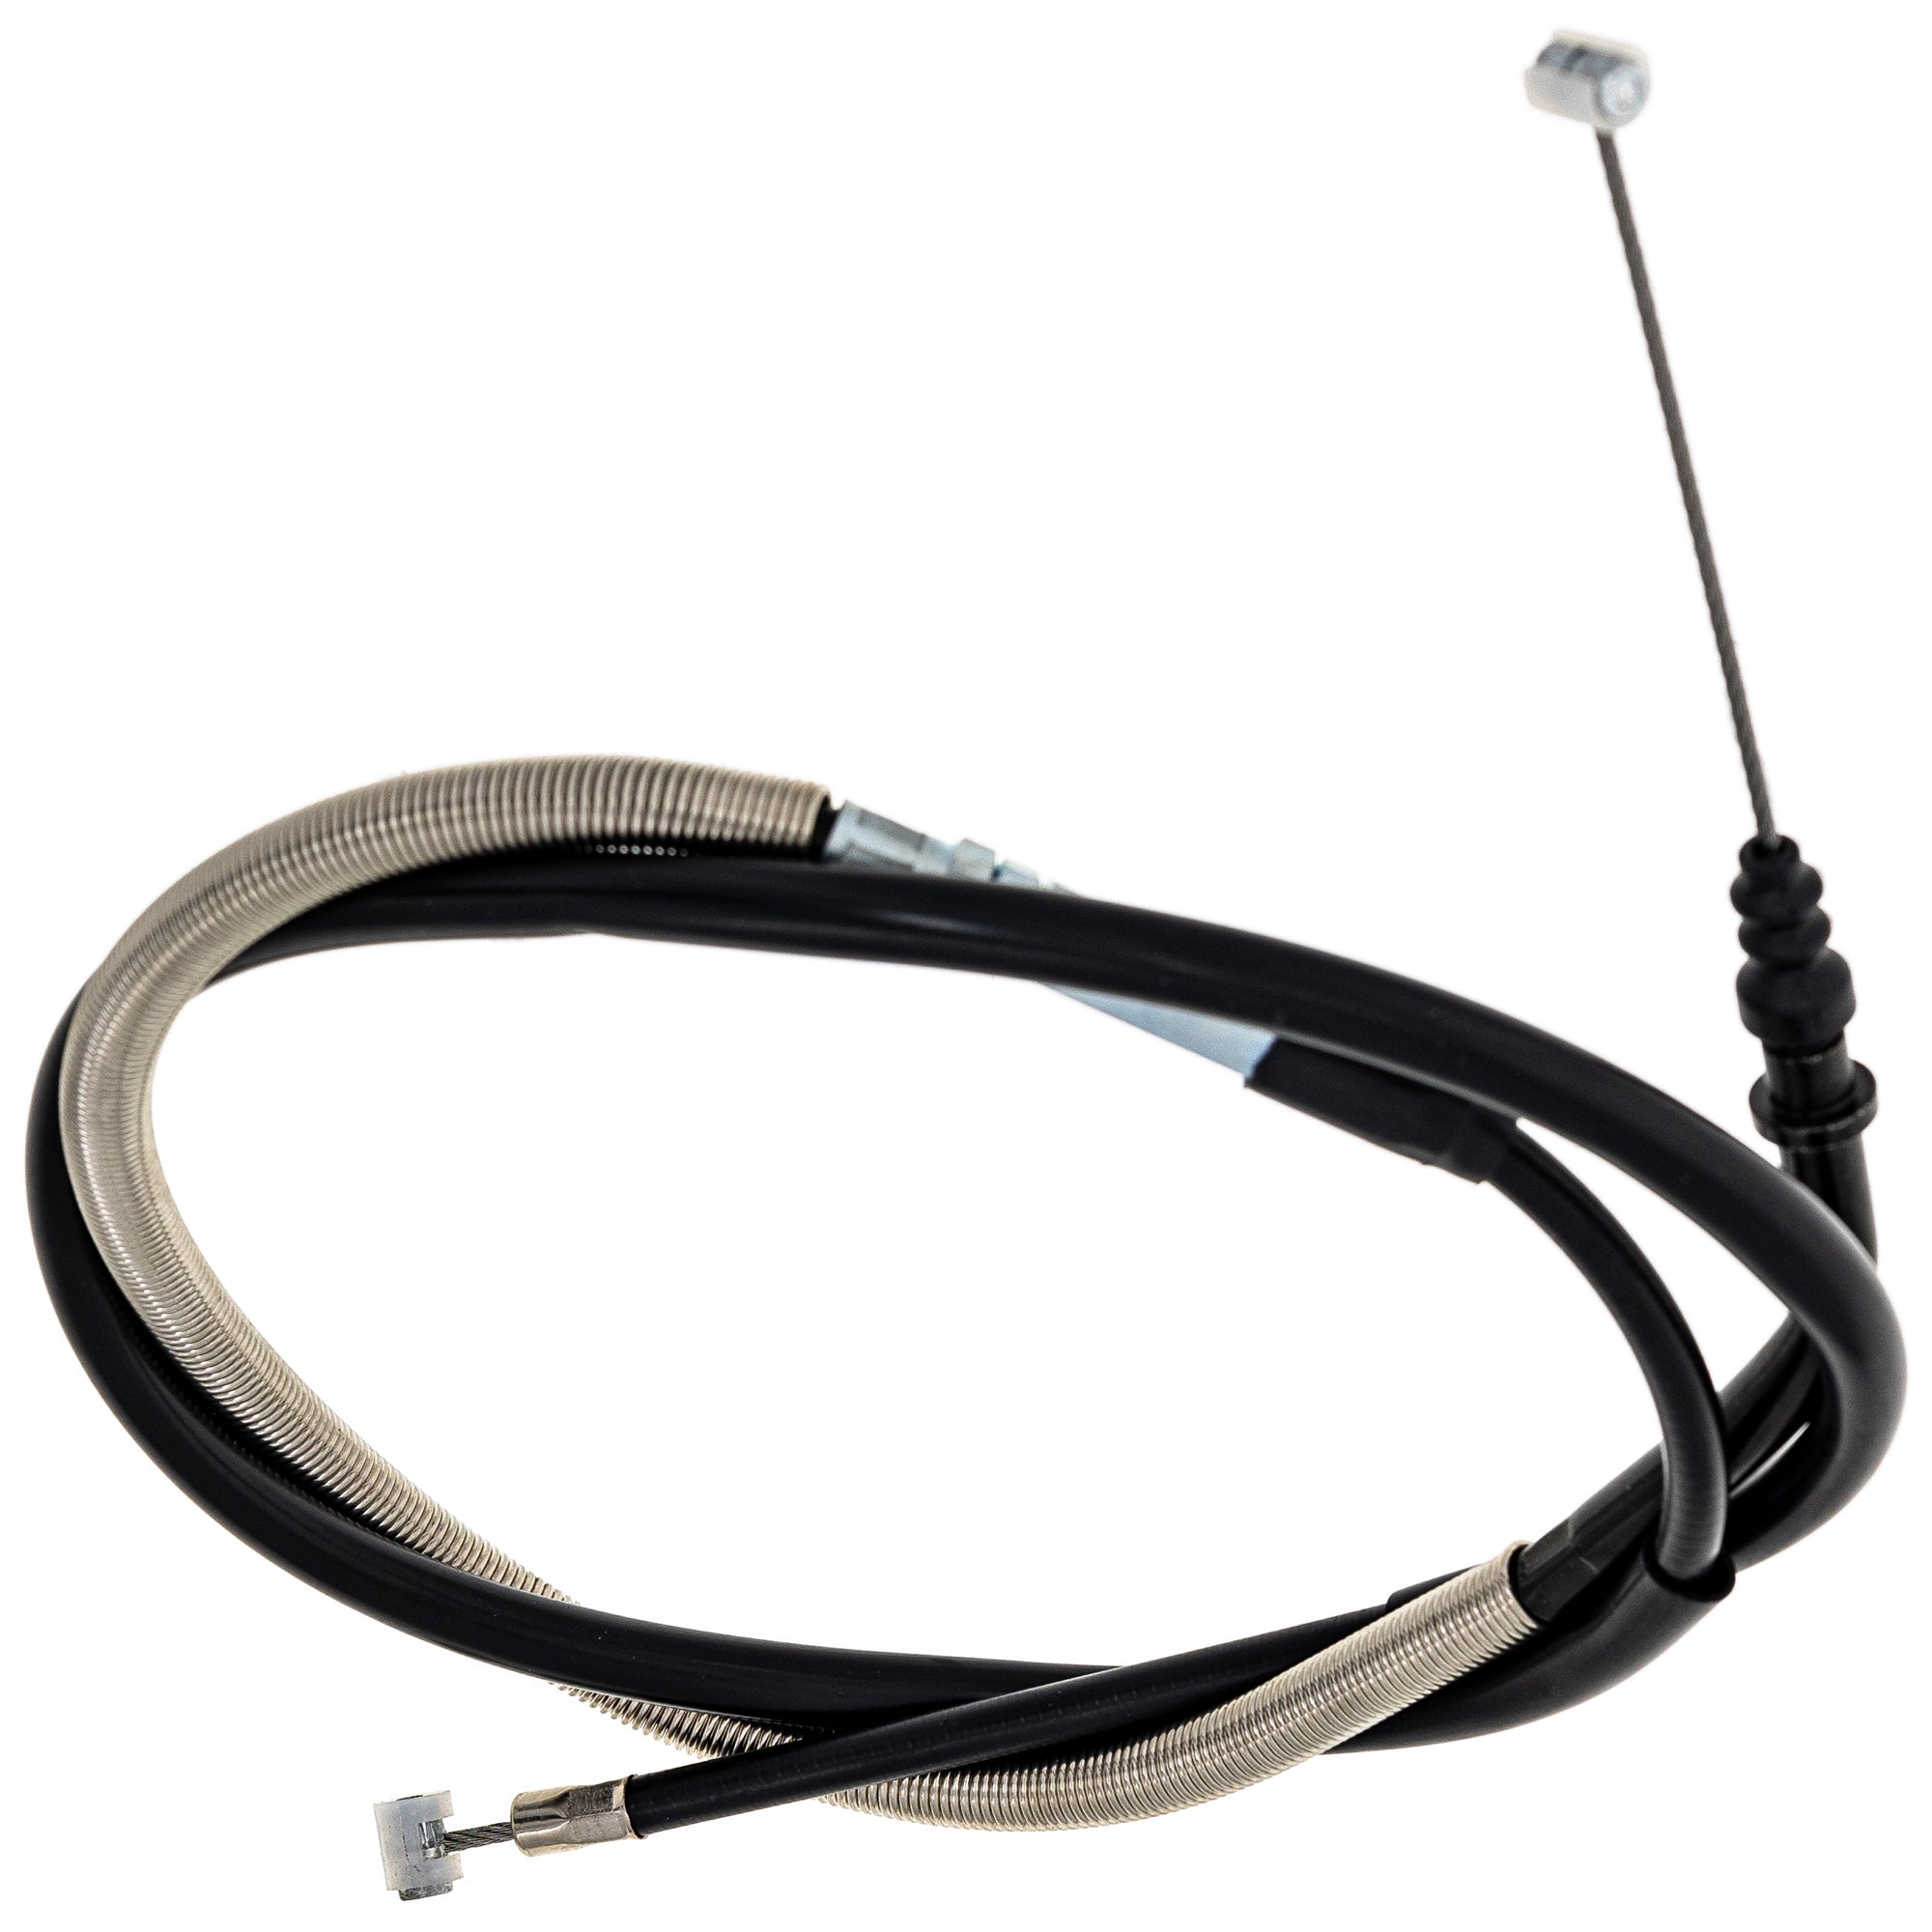 Clutch Cable for Yamaha YFZ450R YFZ450X 18P-26335-00-00 ATV